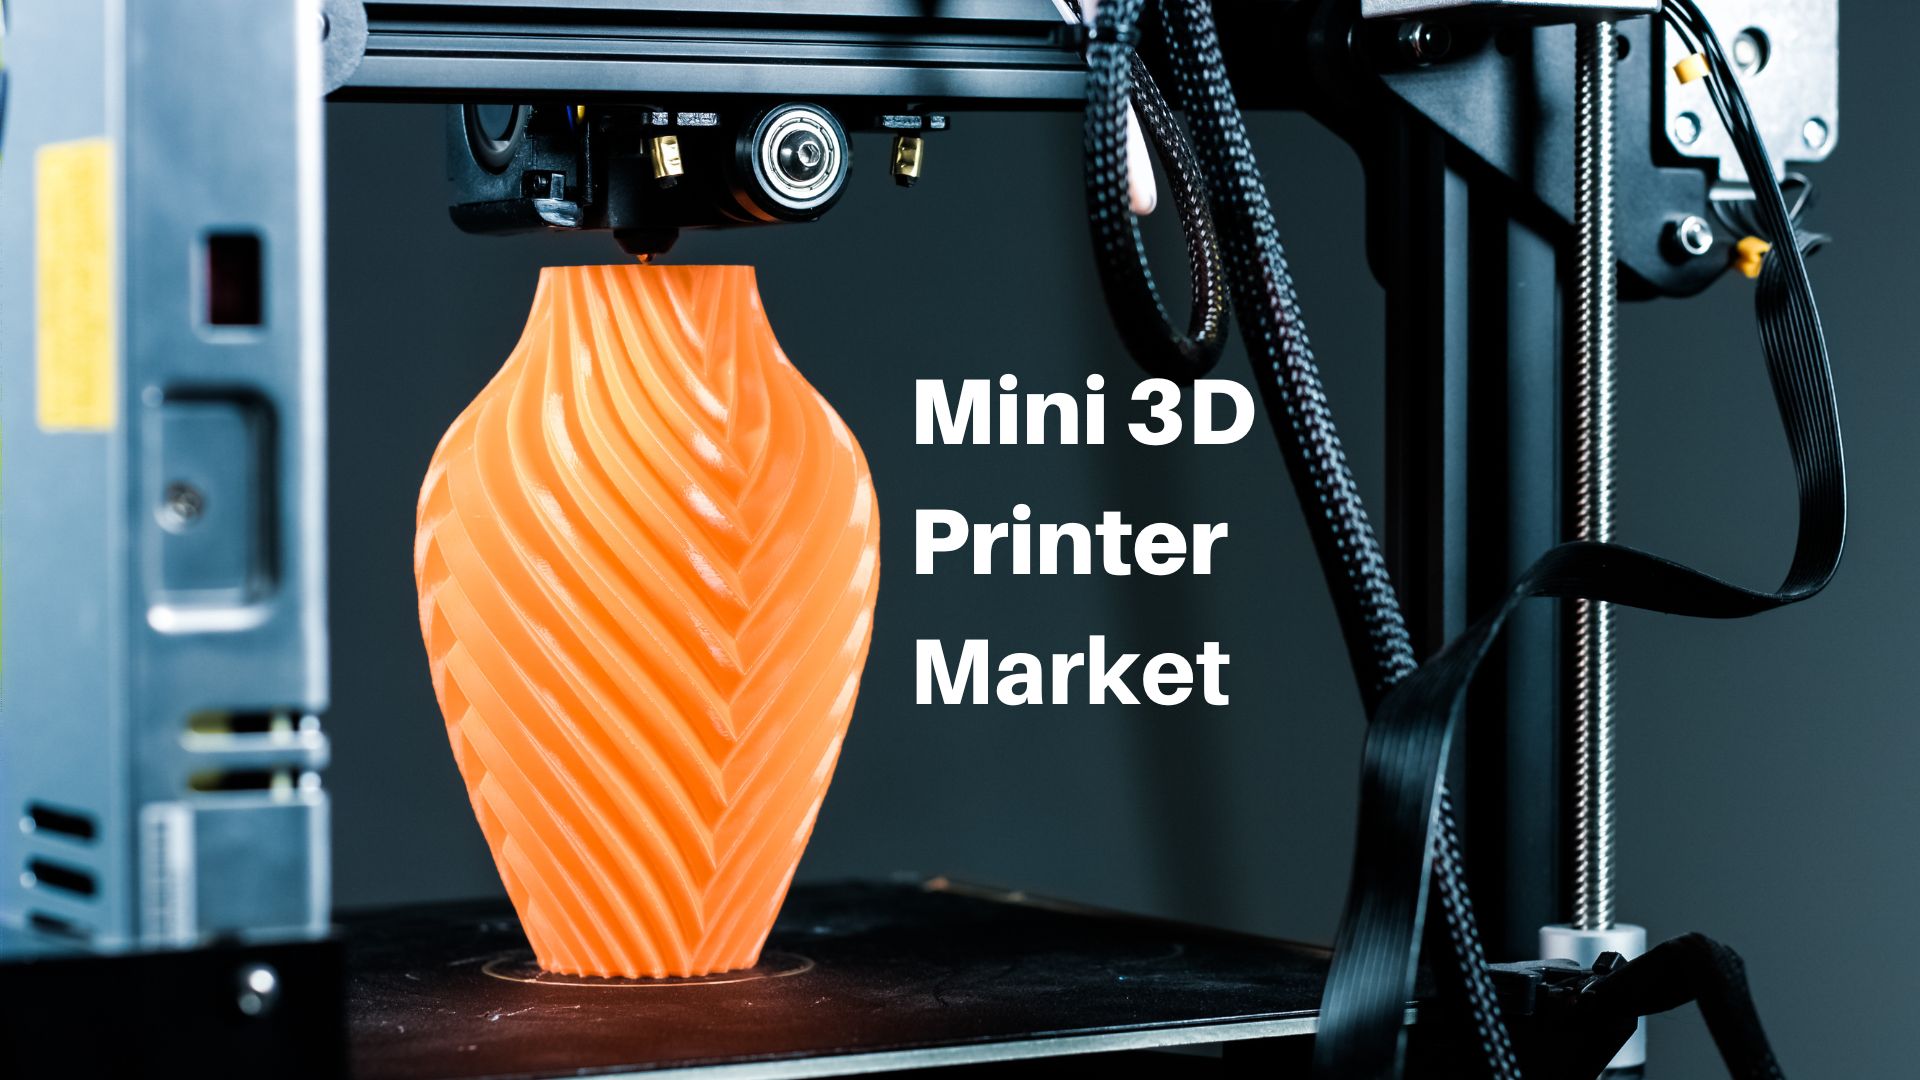 Mini 3D Printer Market Size USD 65.8 Bn | Vendors Analysis (Ingenico, Verifone) By 2032